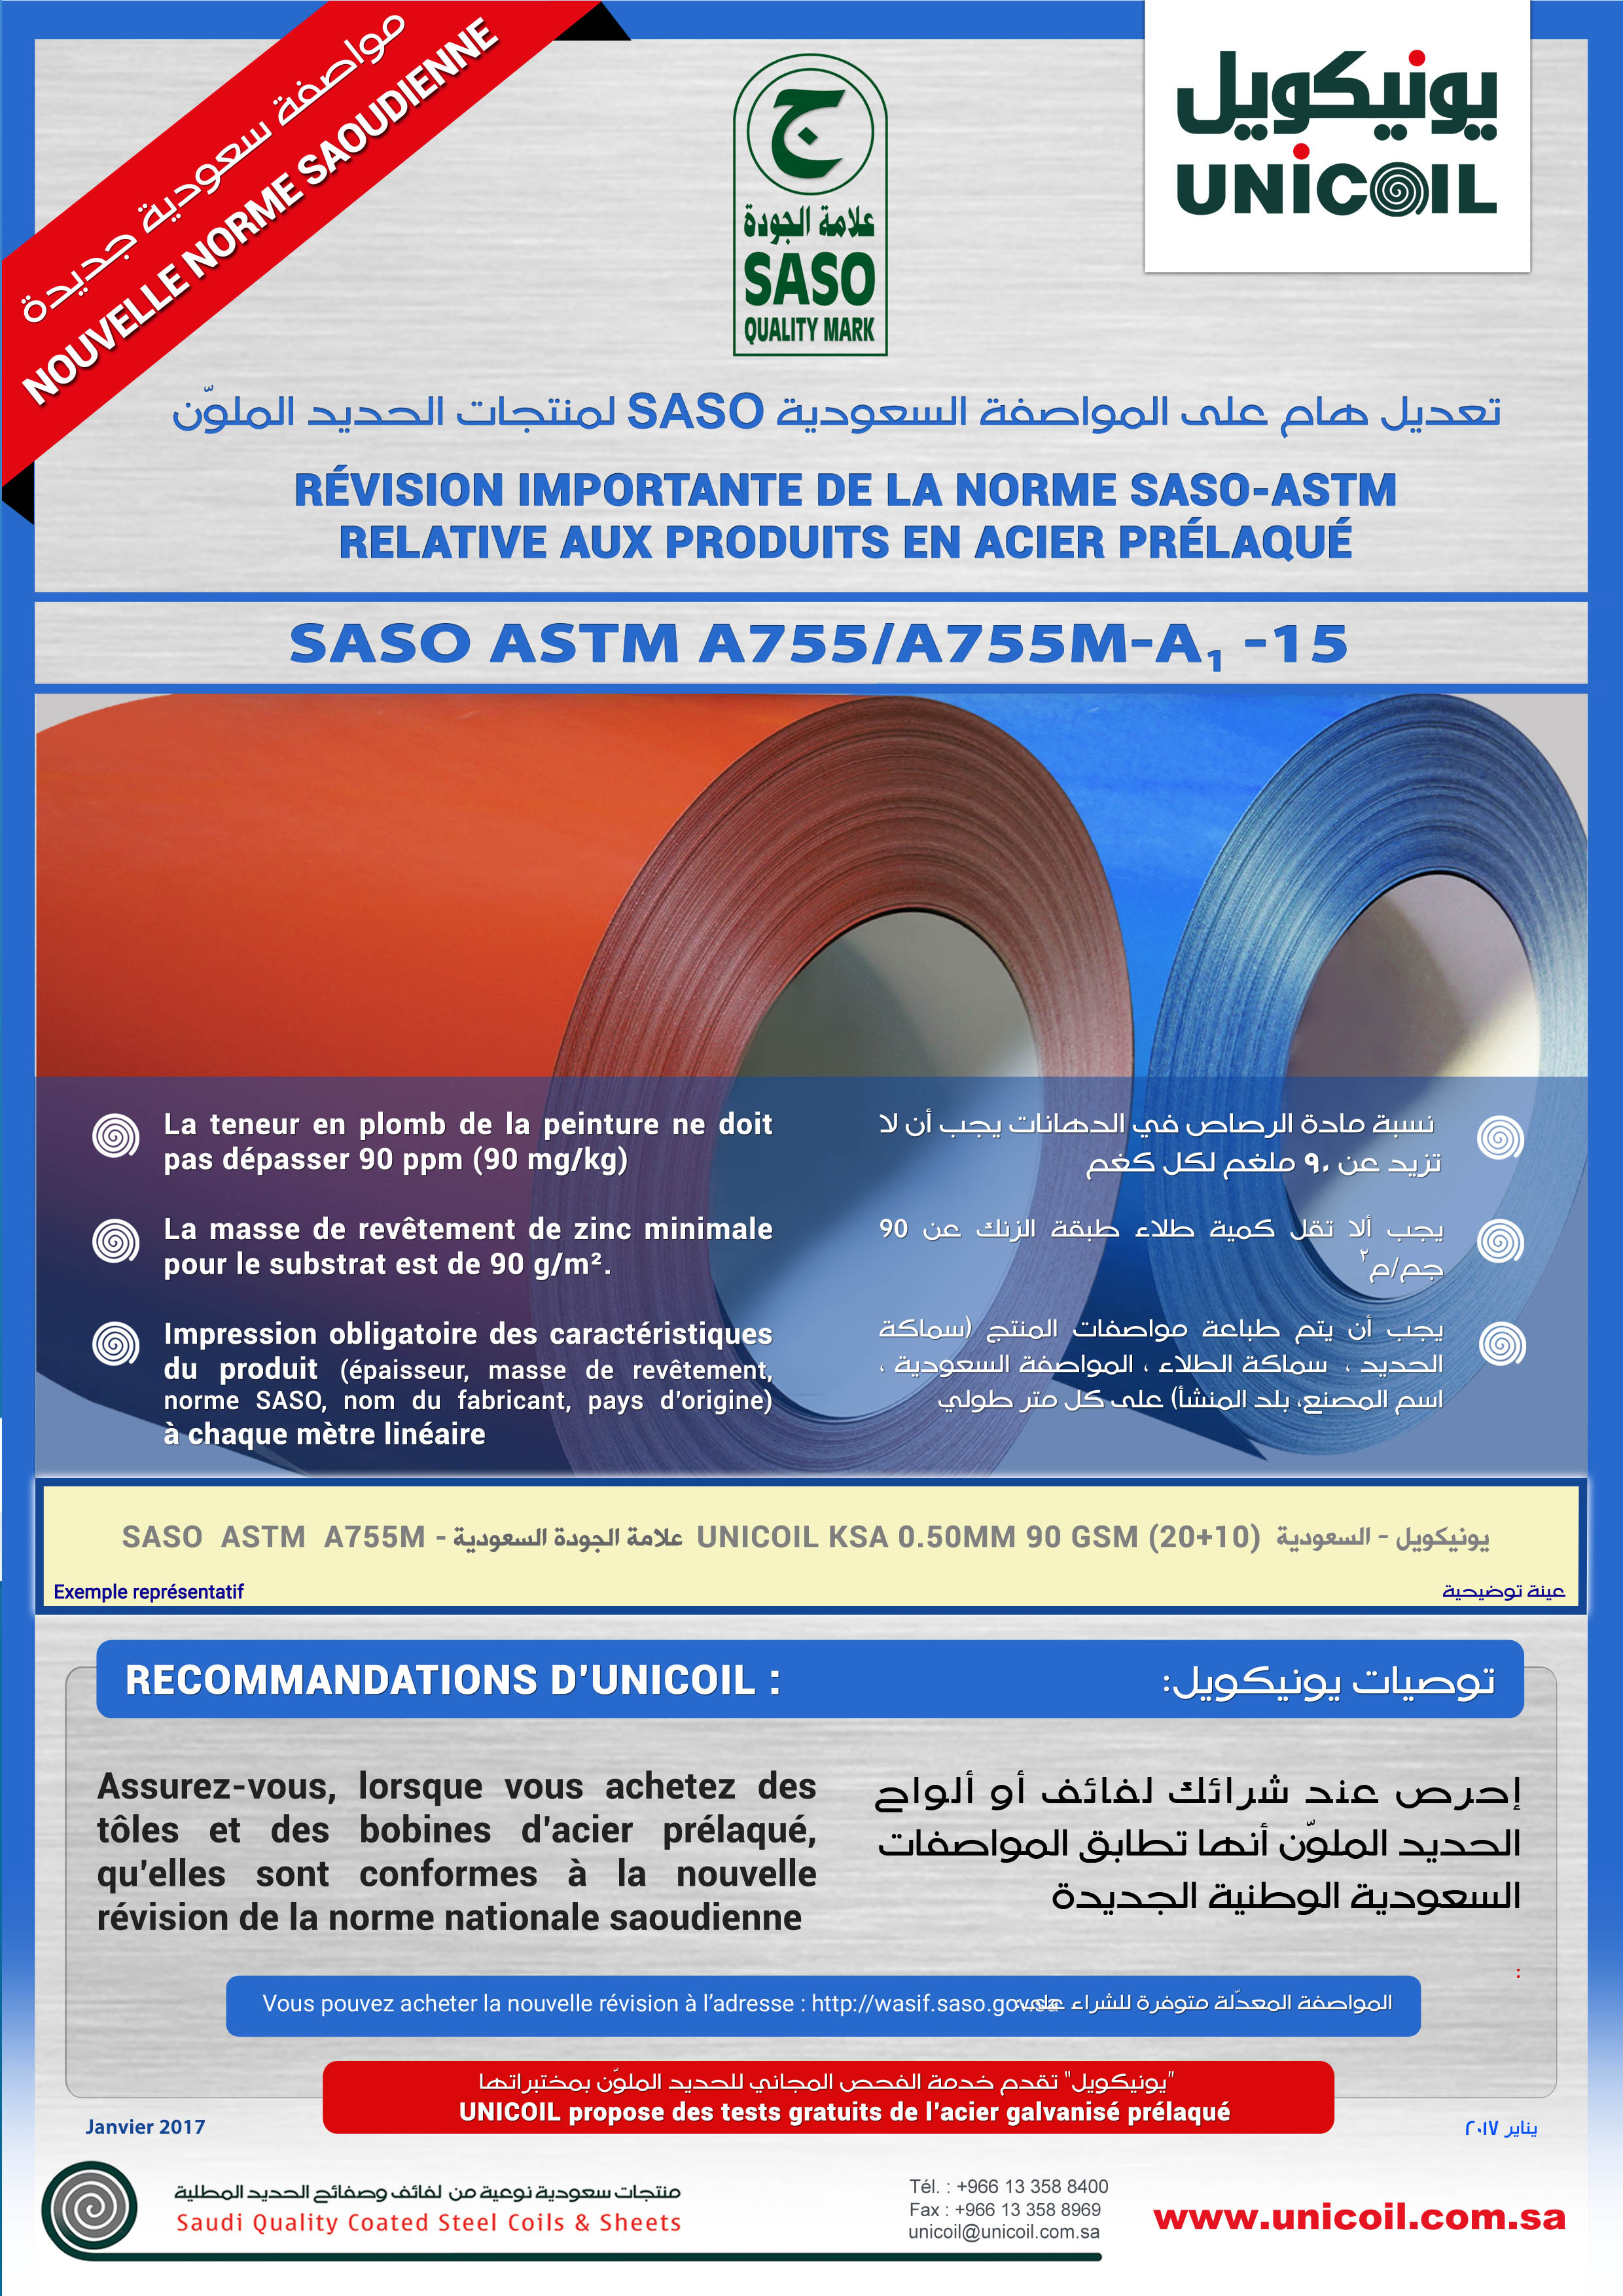 SASO ASTM New Revision